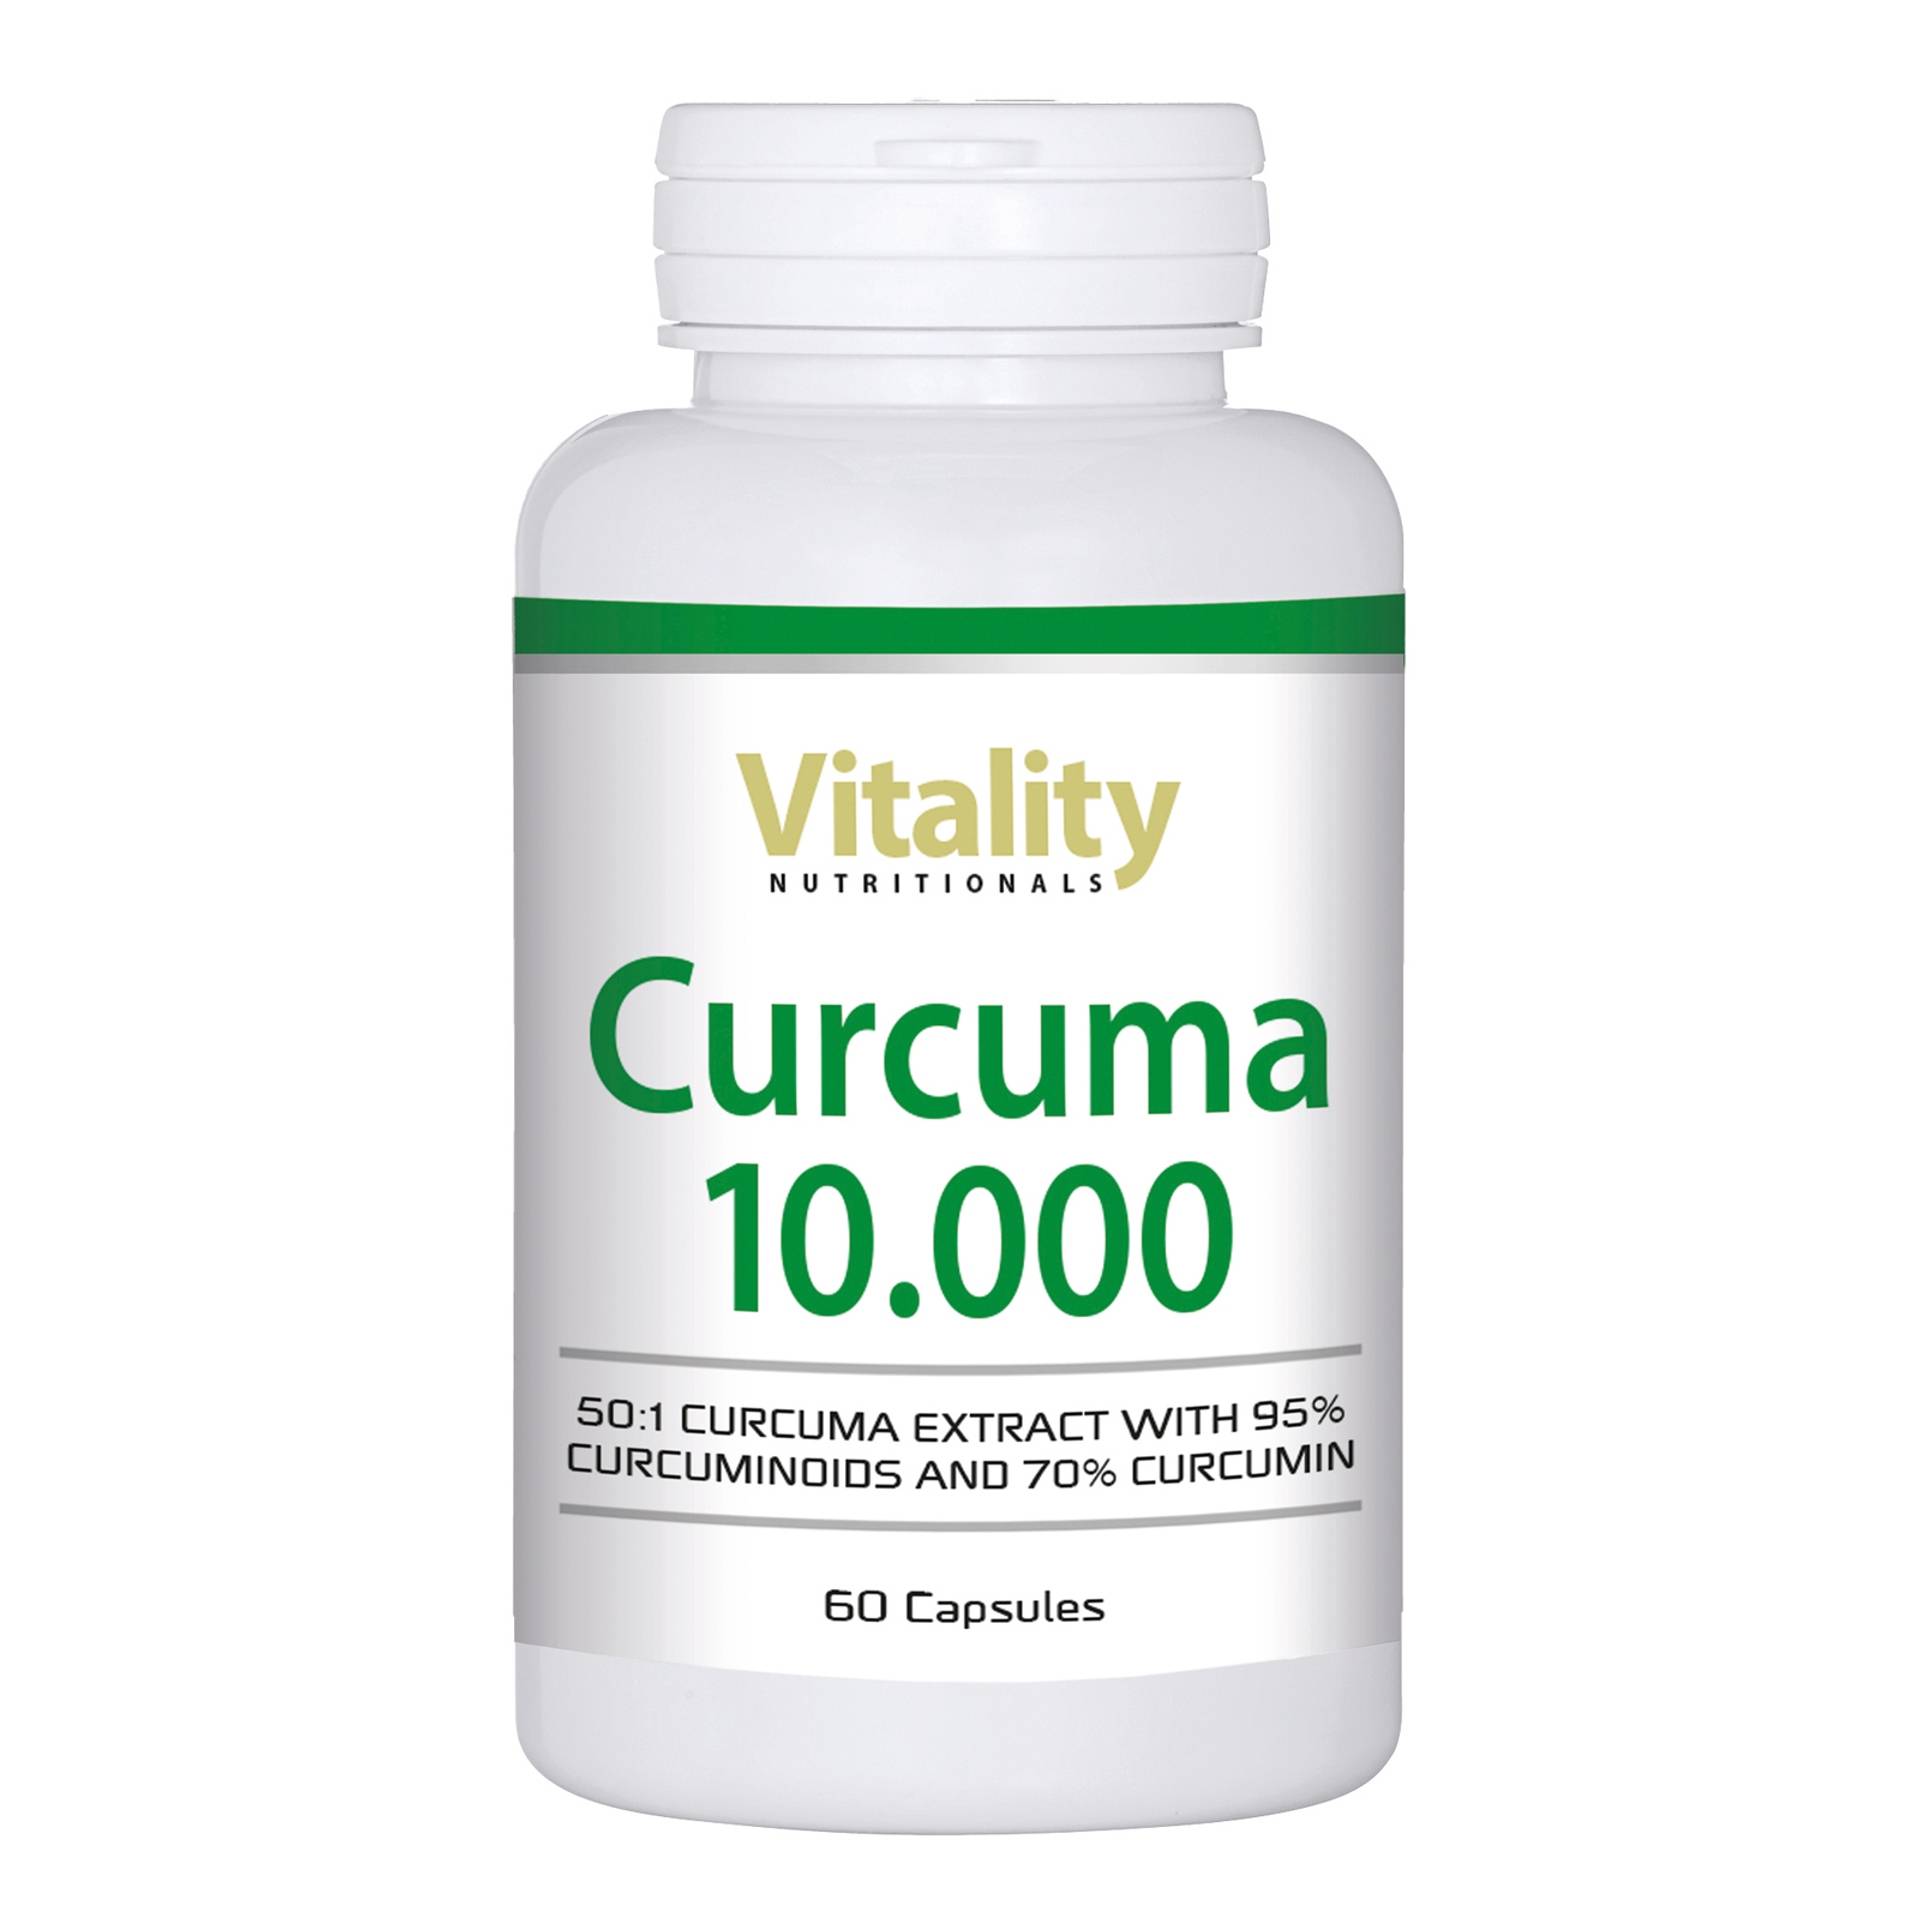 Curcuma-10000_25,1g_60capsules_Packshot-Dose_1600x1600px_72dpi_20230622.jpg